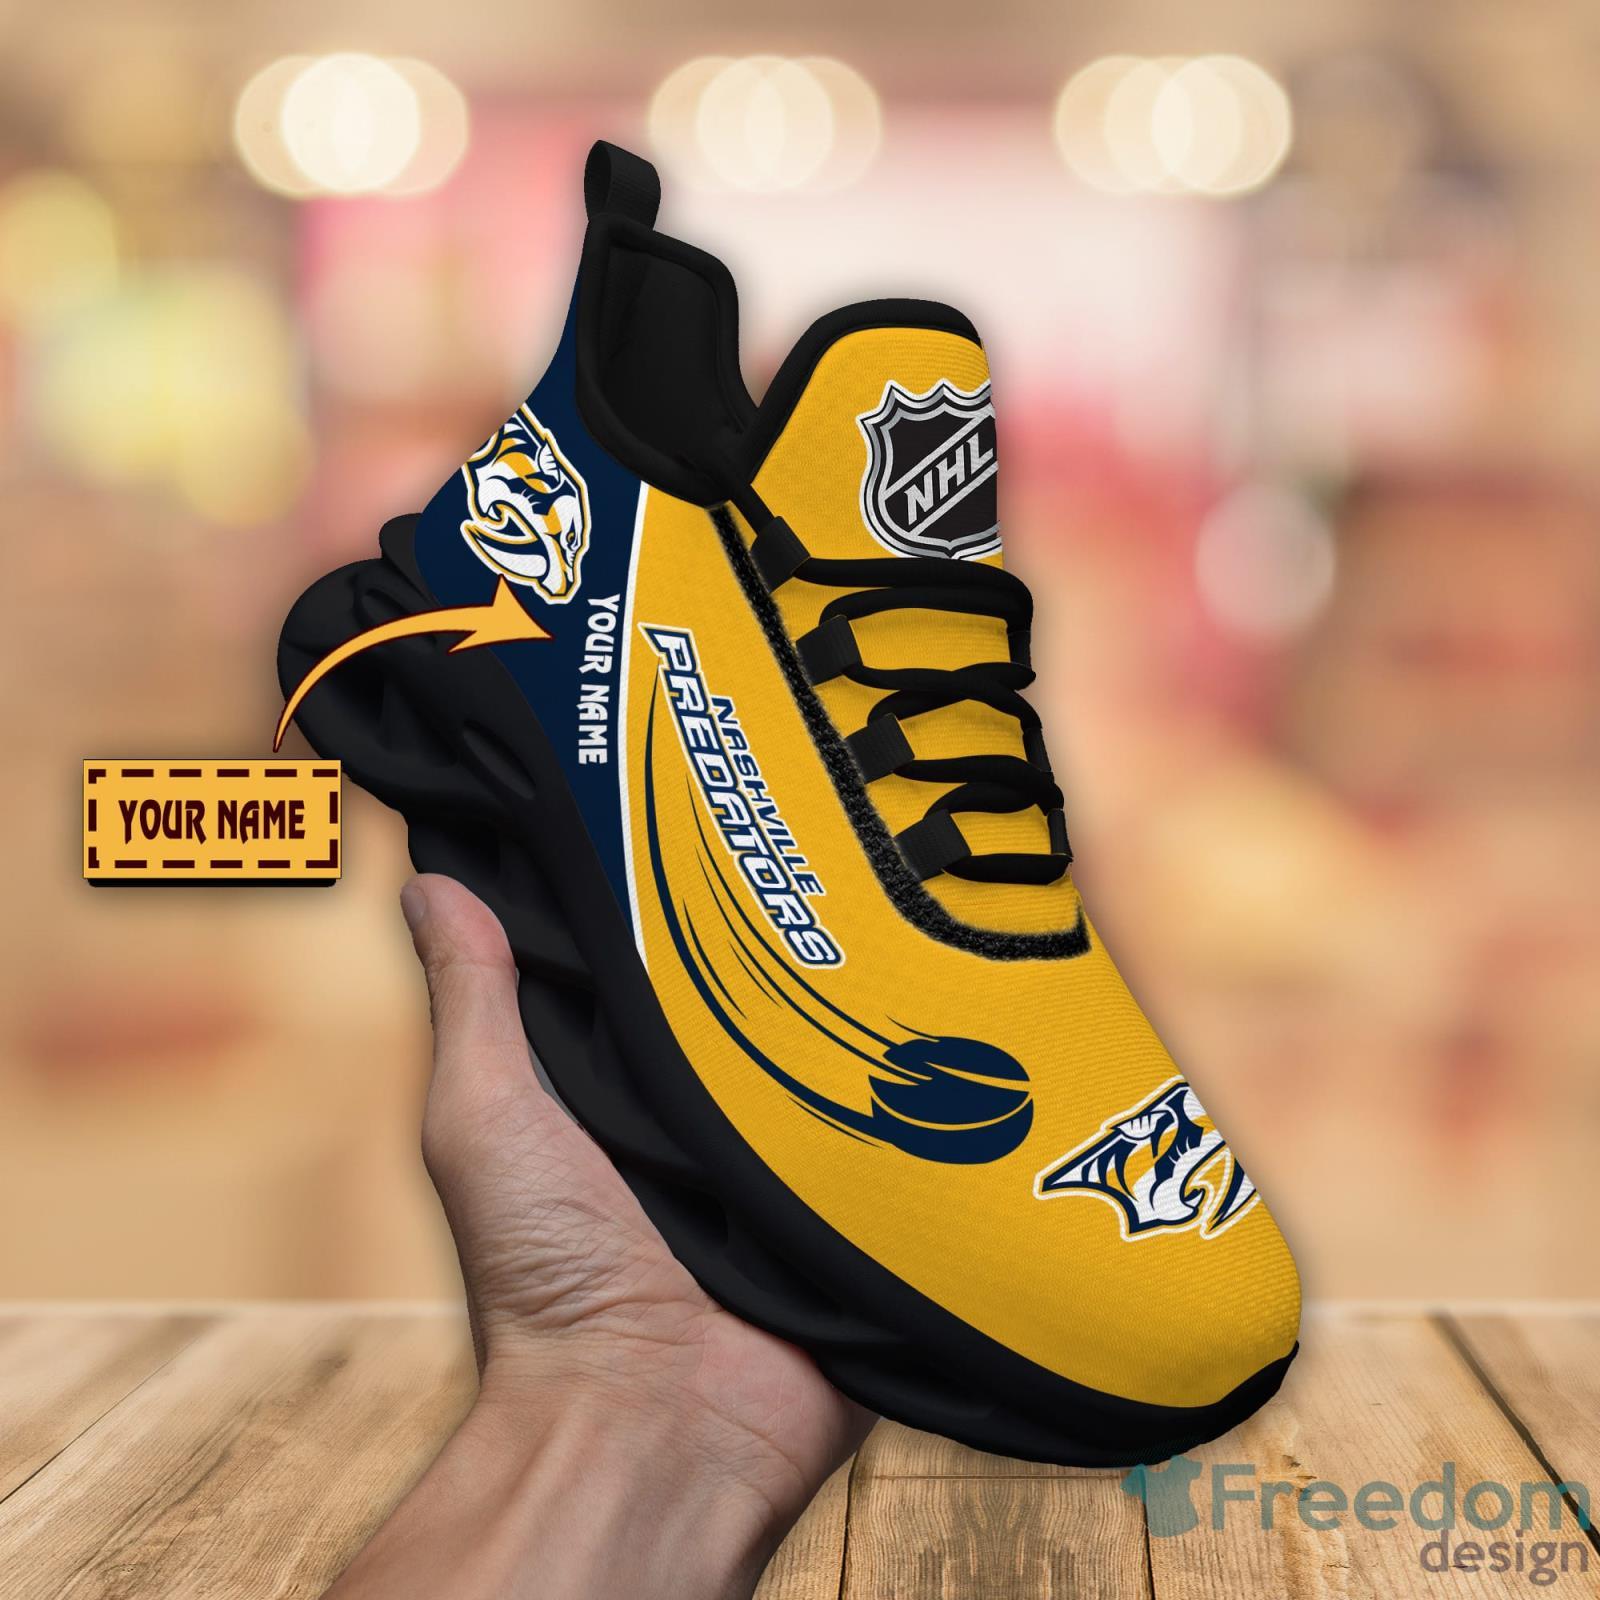 Nashville Predators Sneakers Air Force Custom Shoes For Men And Women -  Freedomdesign